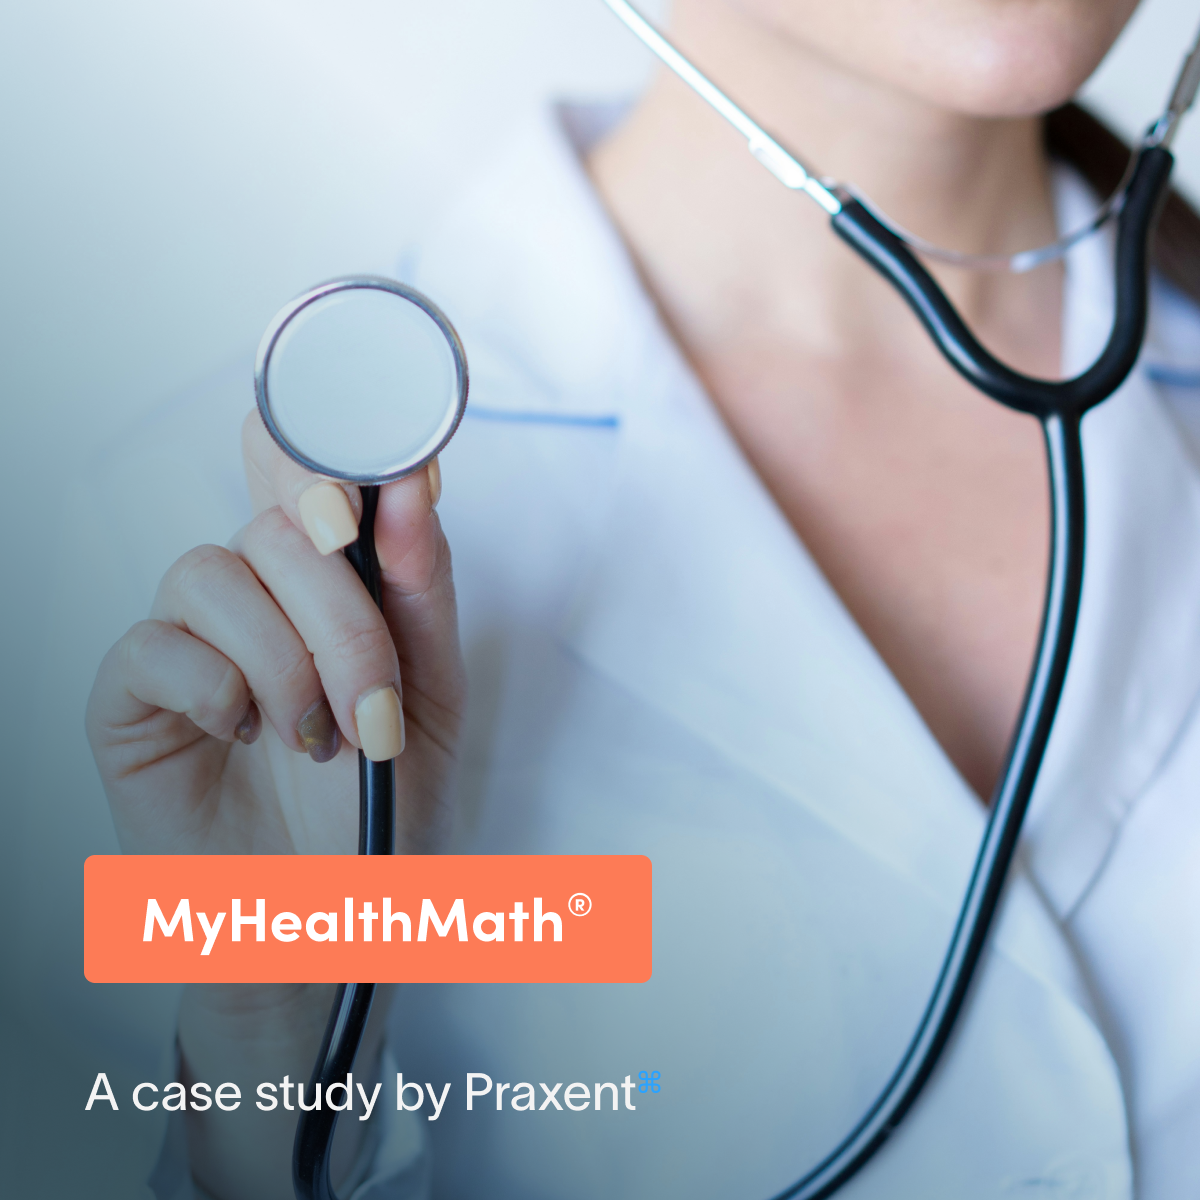 MyHealthMath by Praxent